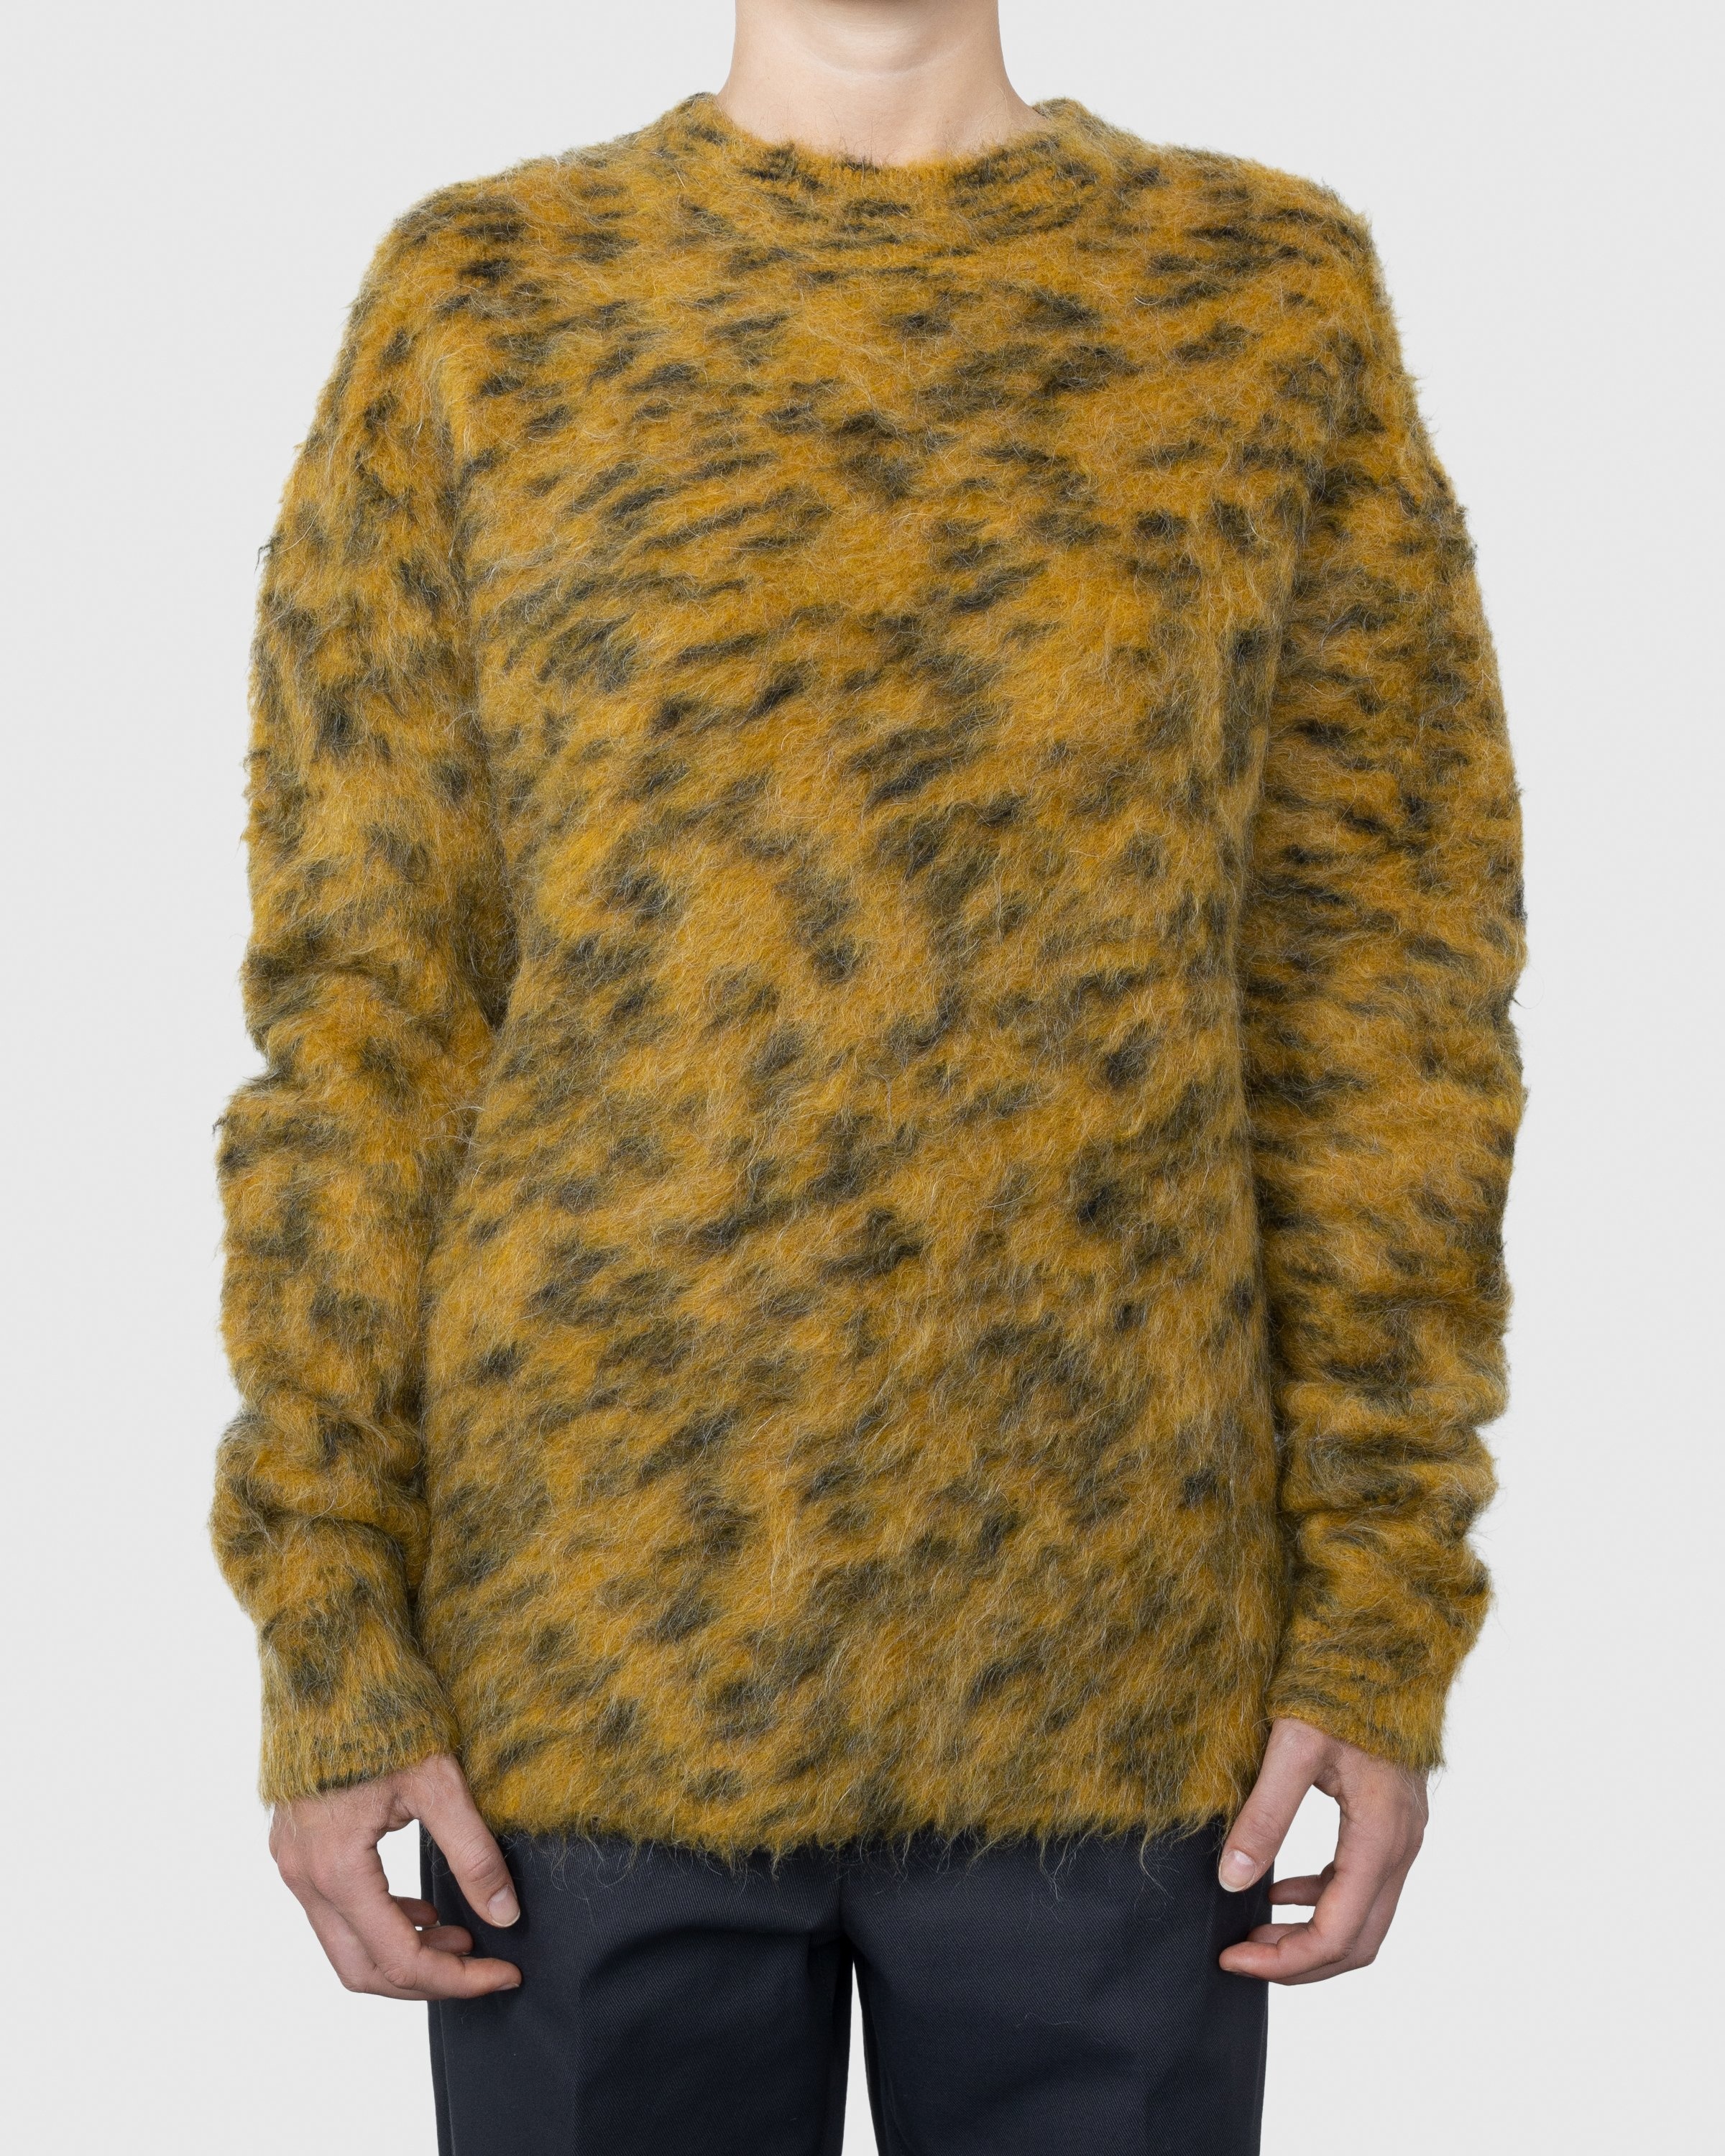 Acne Studios – Hairy Crewneck Sweater Yellow - Knitwear - Yellow - Image 2